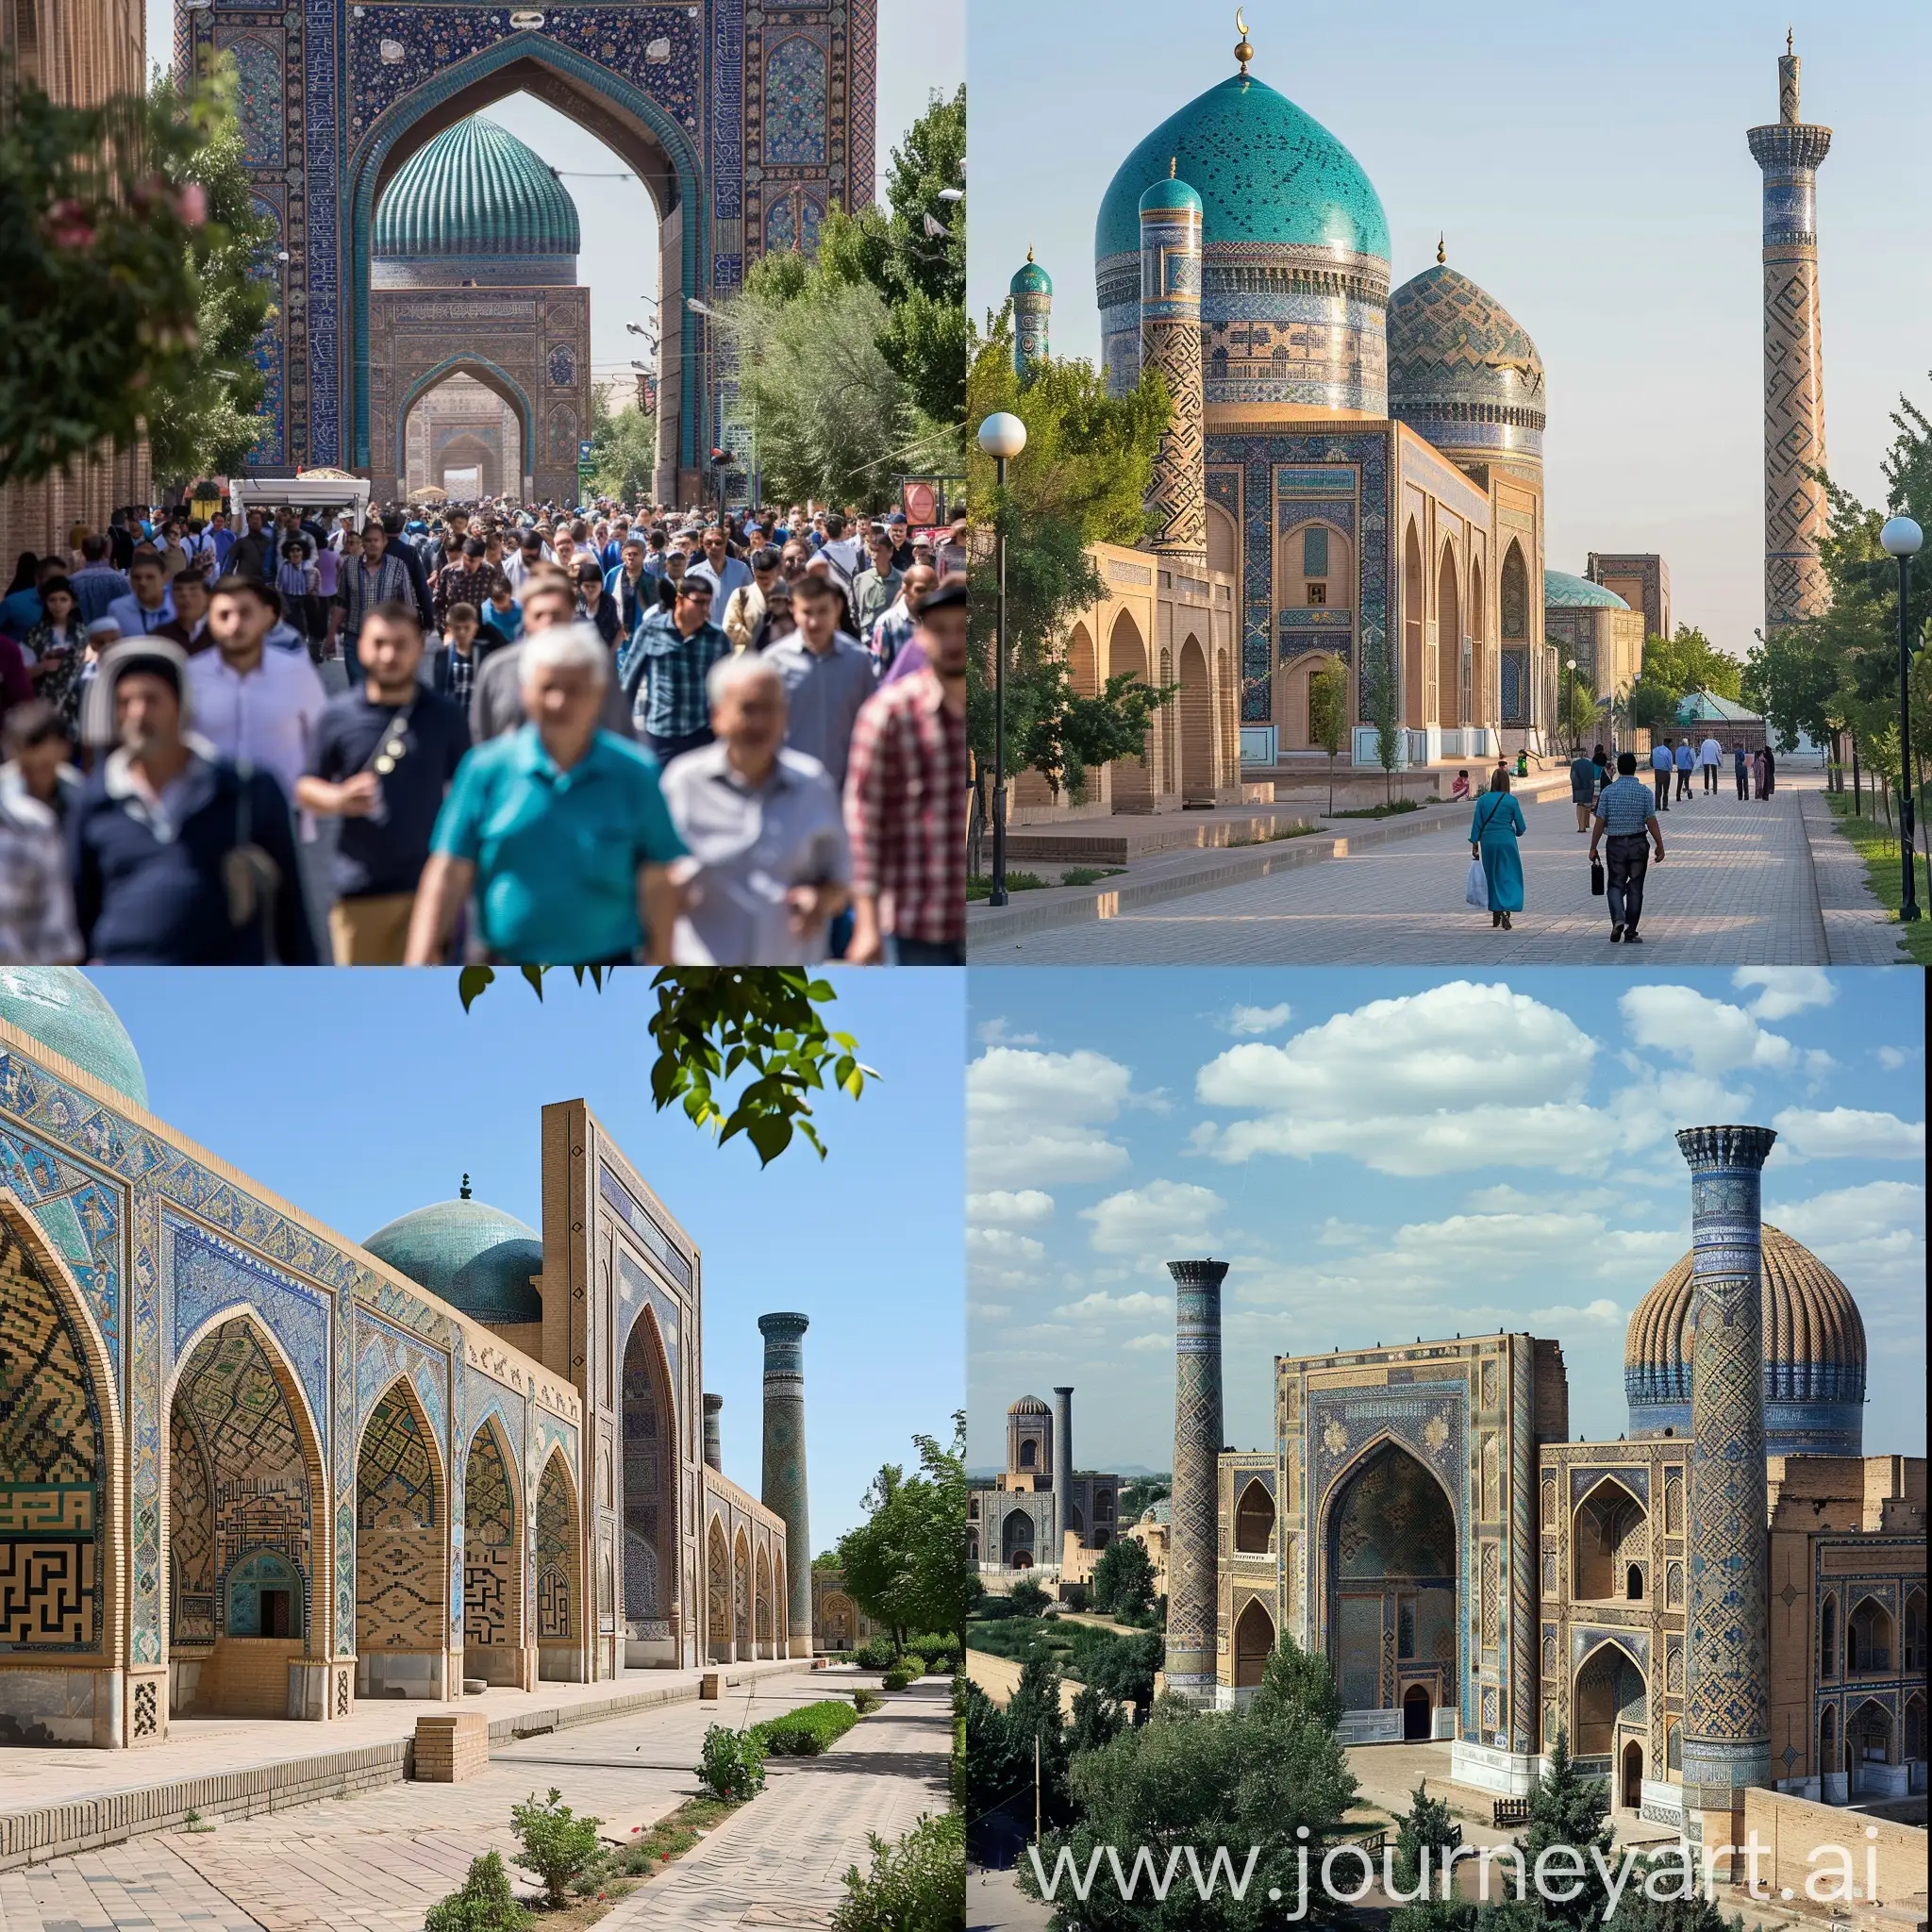 Diverse-Population-of-Uzbekistan-Gathering-Vibrant-Cultural-Diversity-Displayed-in-a-11-Aspect-Ratio-Scene